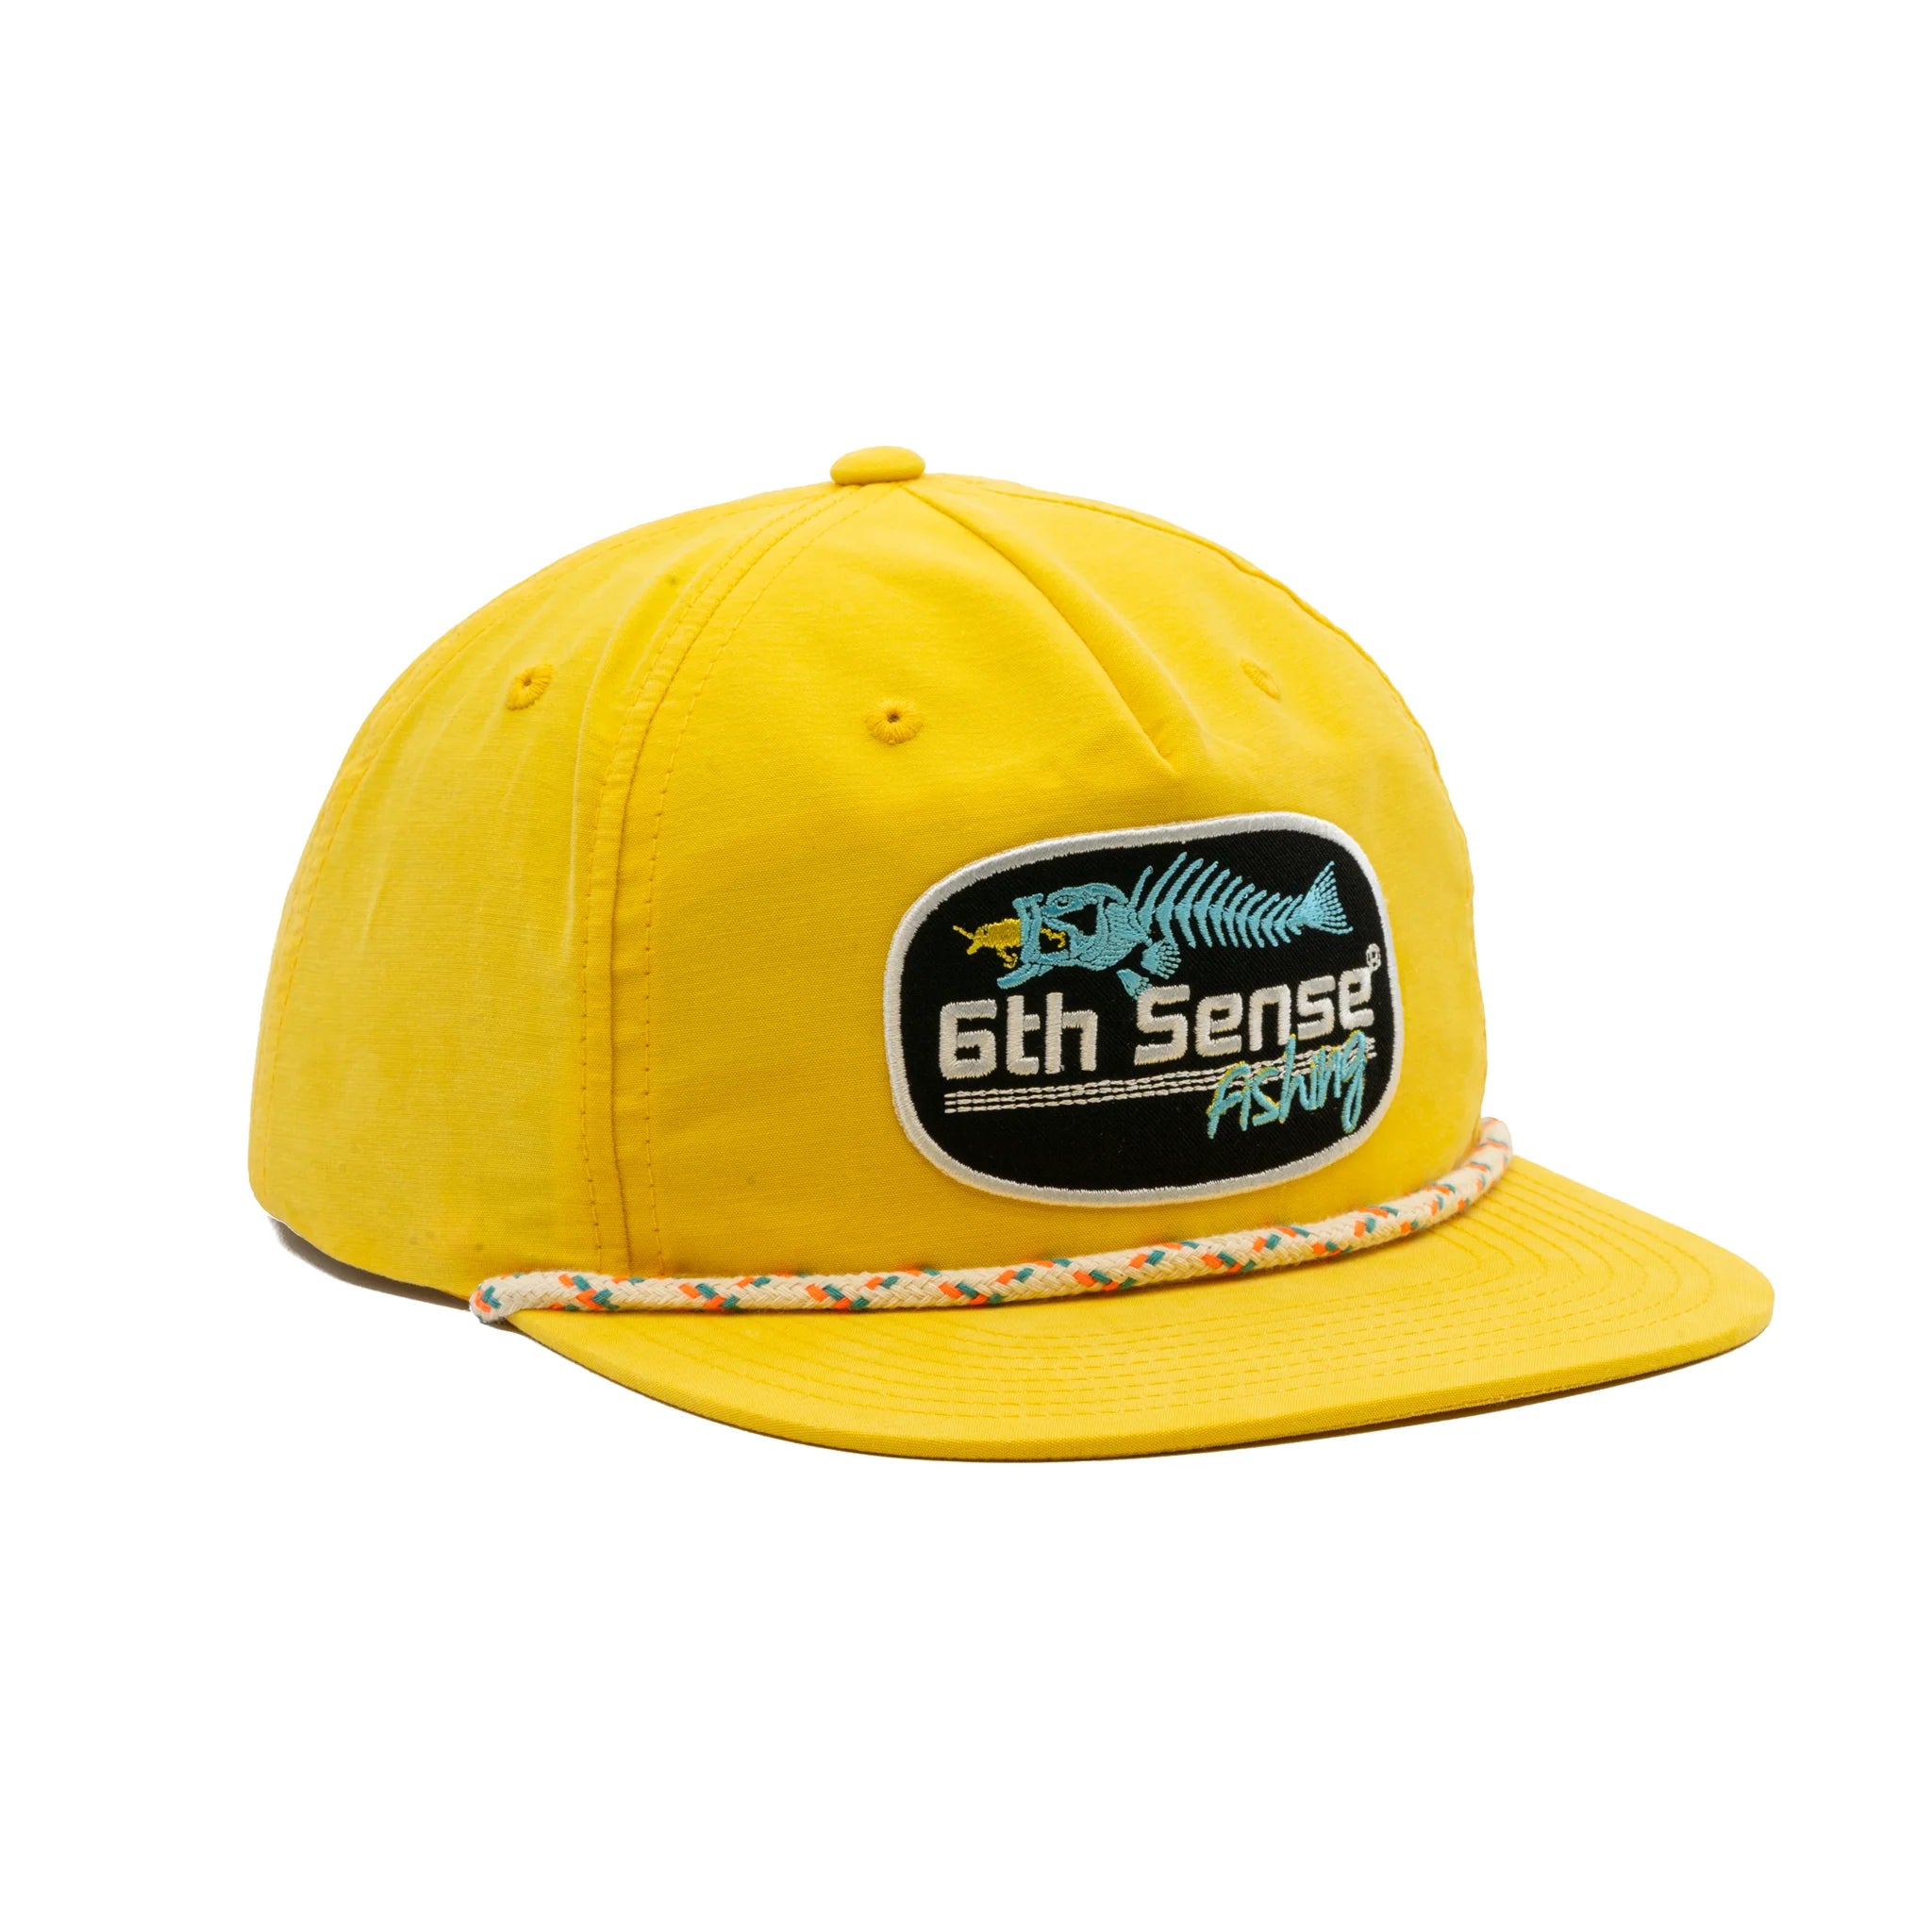 Buy old-timer-retro-fishbones 6TH SENSE HATS